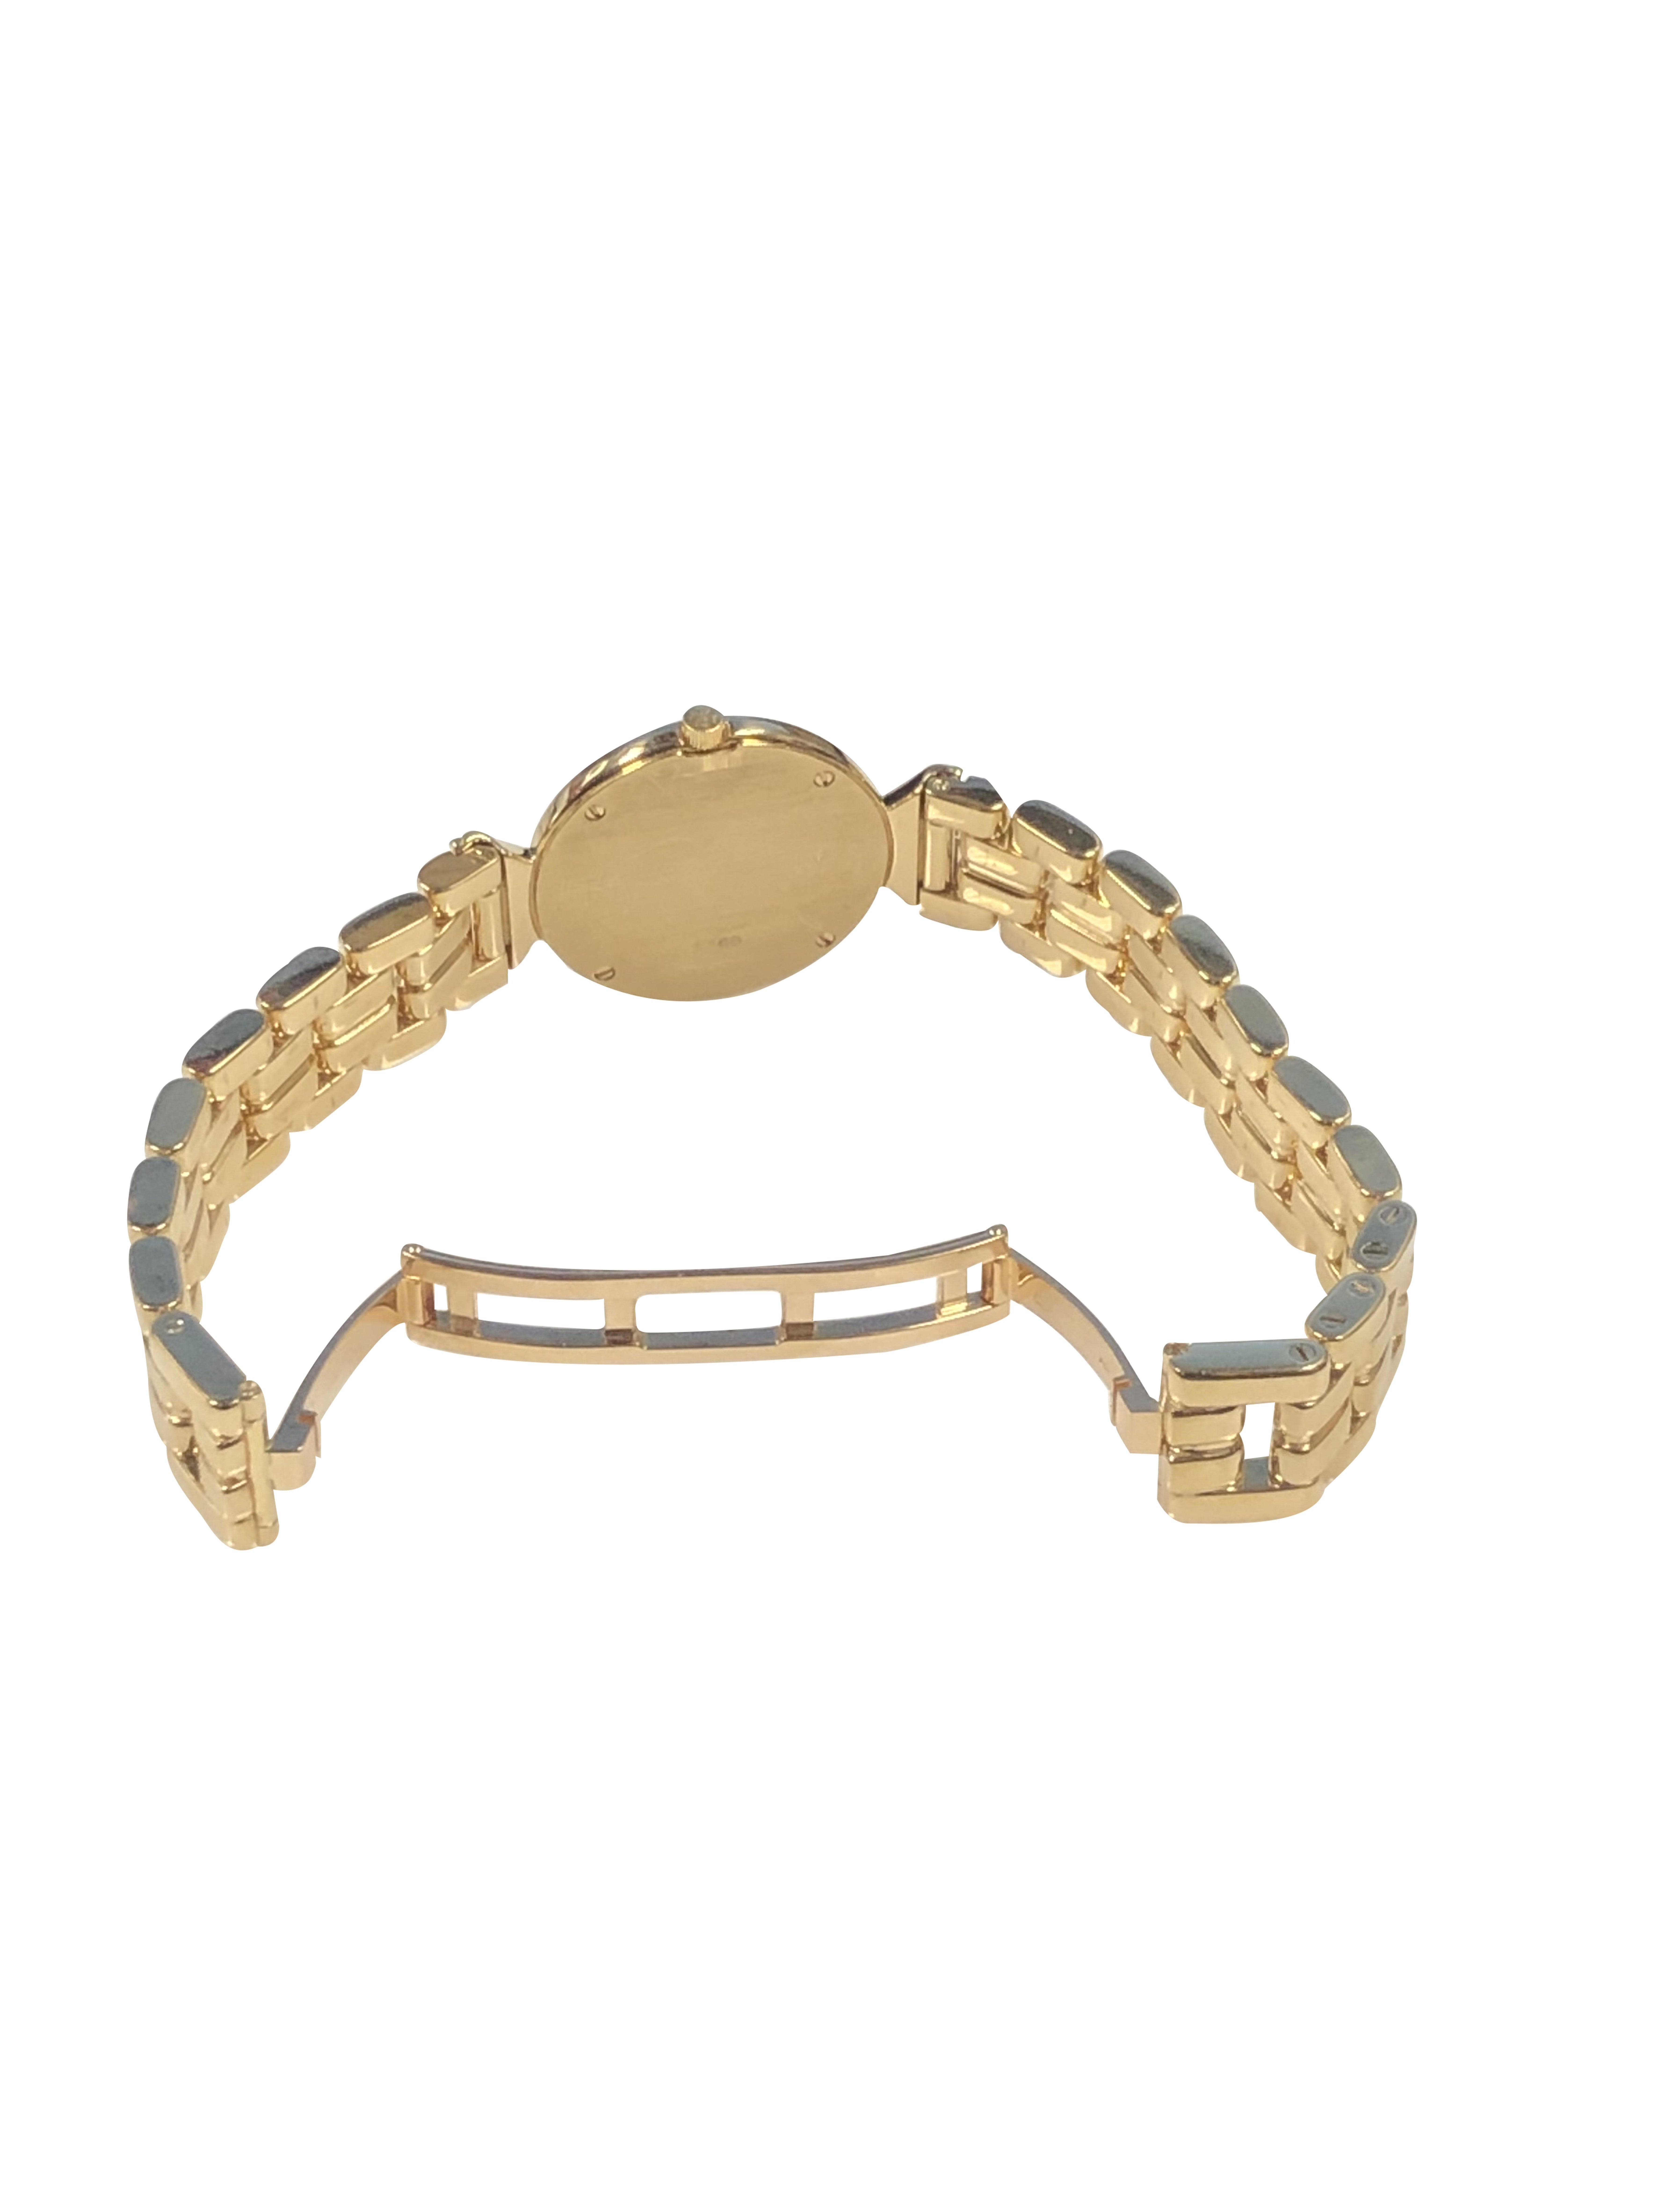 Round Cut Vacheron & Constantin Malta Ladies Gold and Diamonds Quartz Wrist Watch For Sale